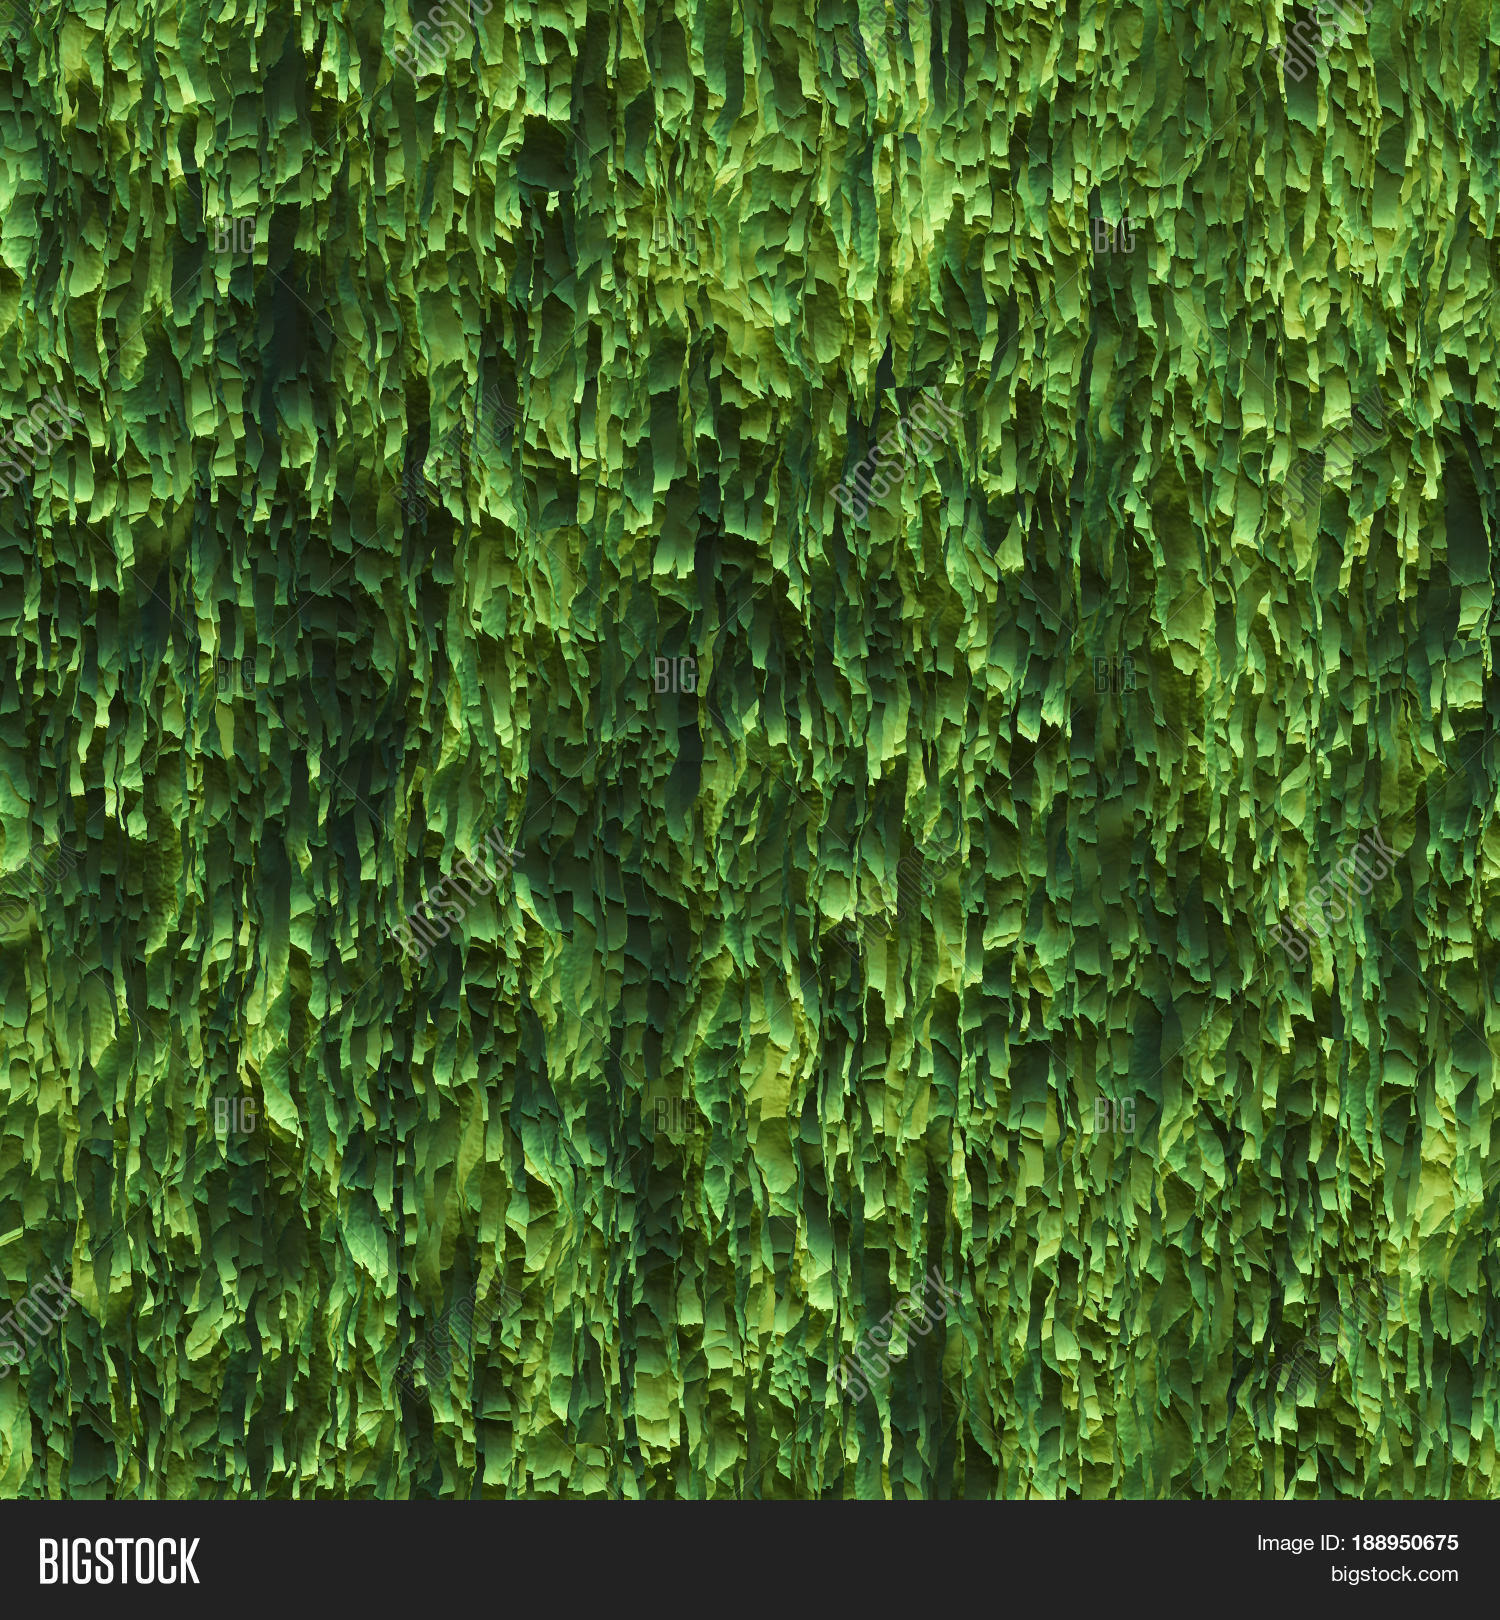 Green seaweed texture photo